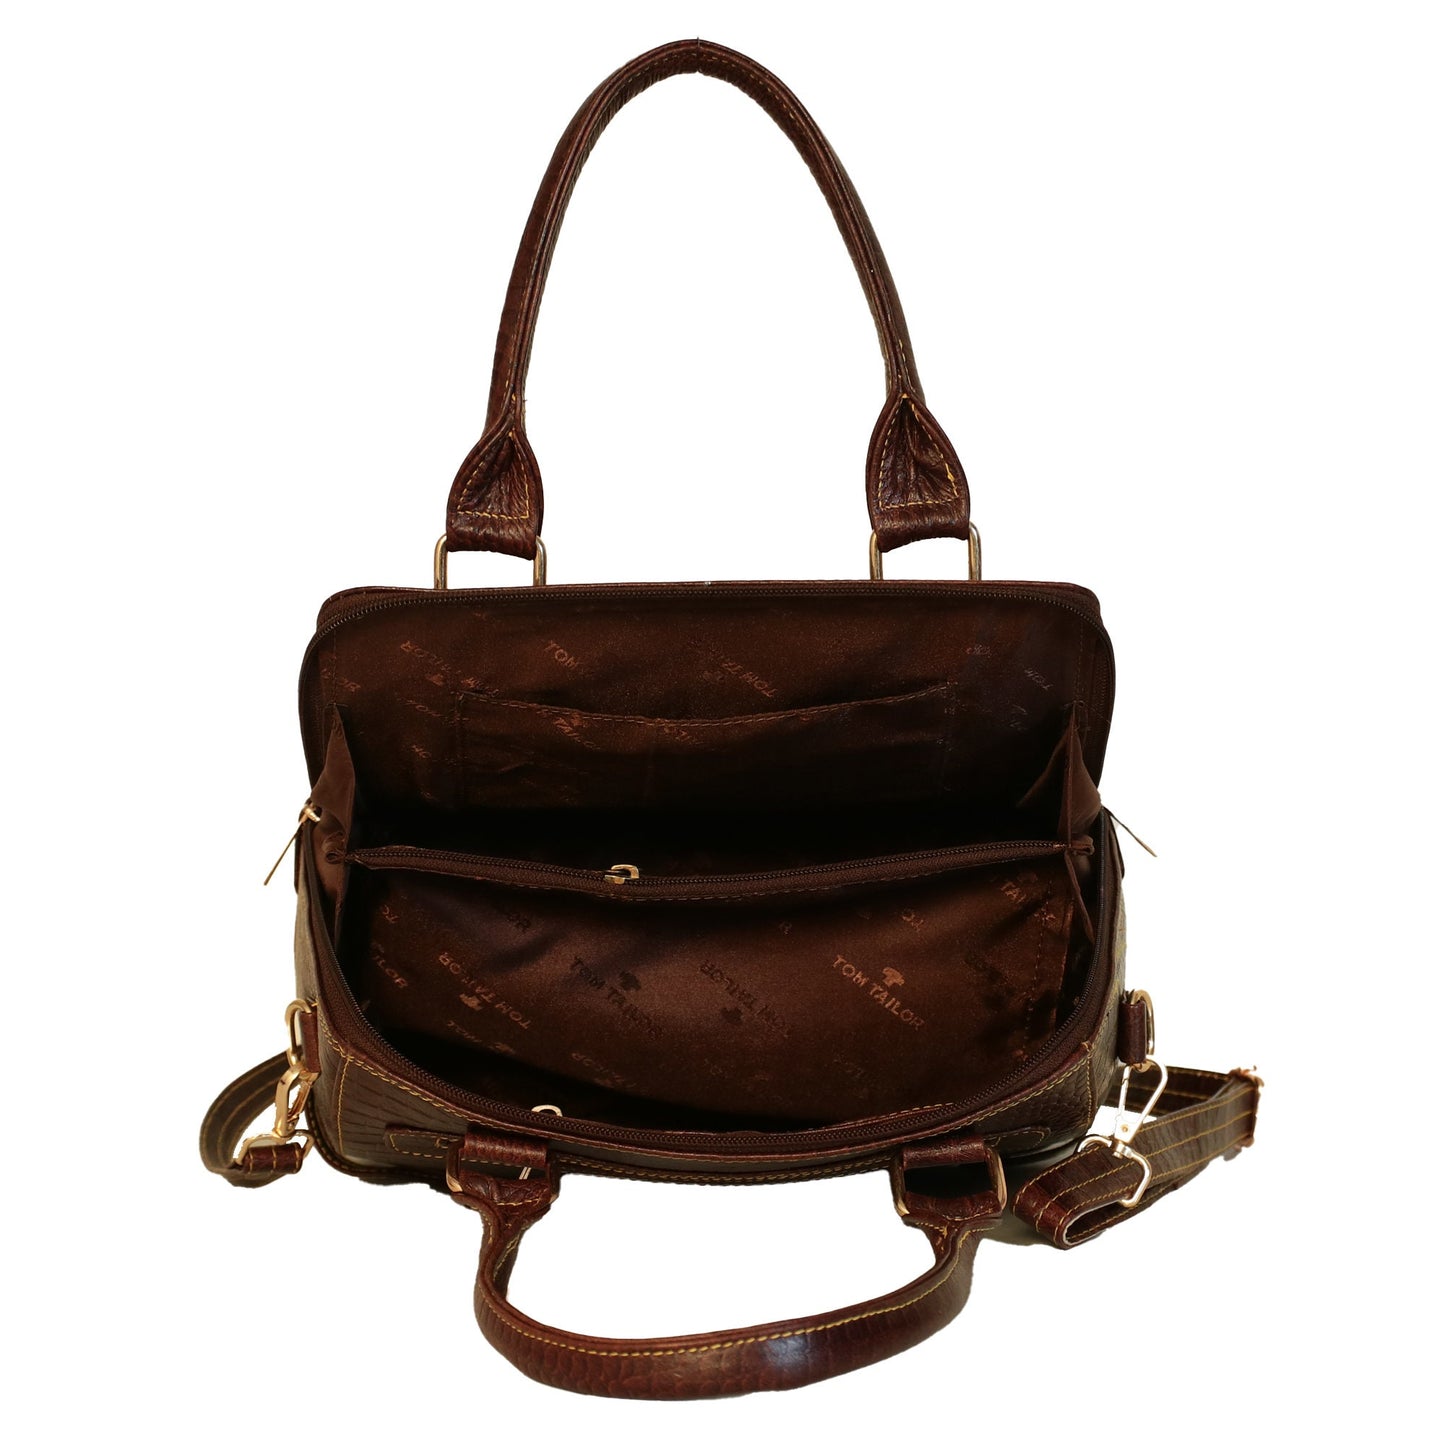 Genuine Leather Bag for Women's Handmade Leather Bag, Handbag, Woman Leather Bag, Elegant Leather Bag, Made in India Handbag, Christmas Gift